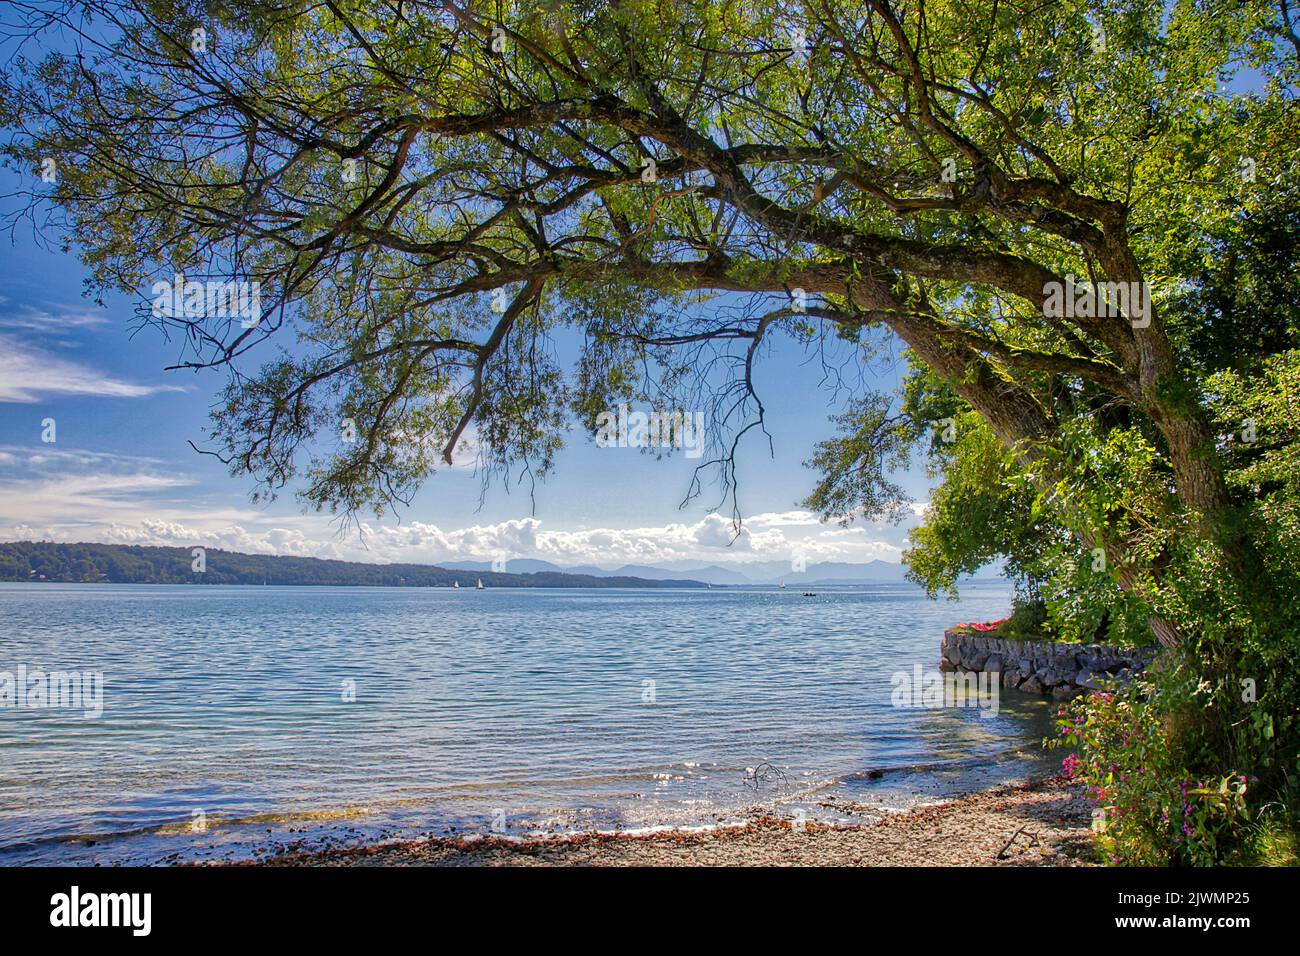 DE - BAVARIA: Tranquility along Lake Starnberg at Feldafing, Oberbayern Stock Photo